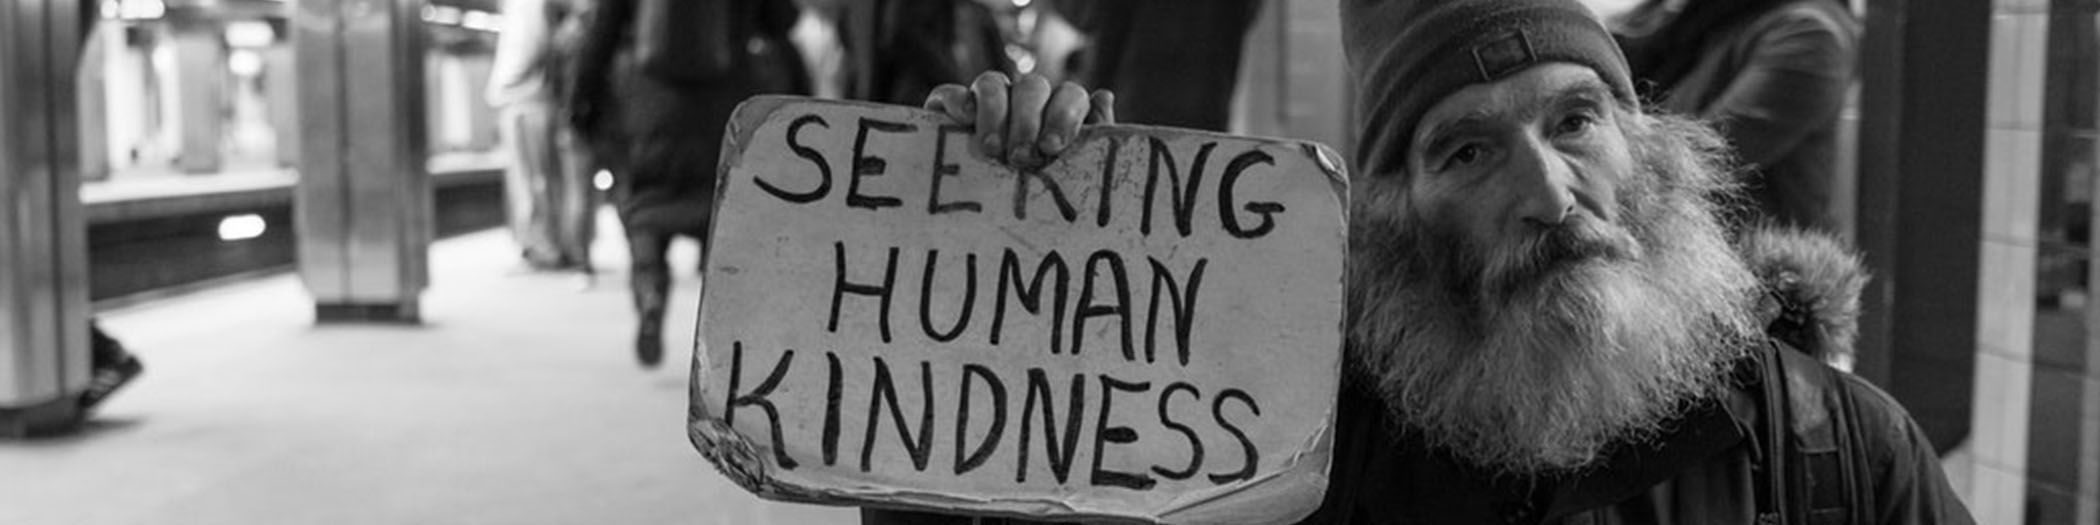 Homeless man holding sign saying 'Seeking human kindness'